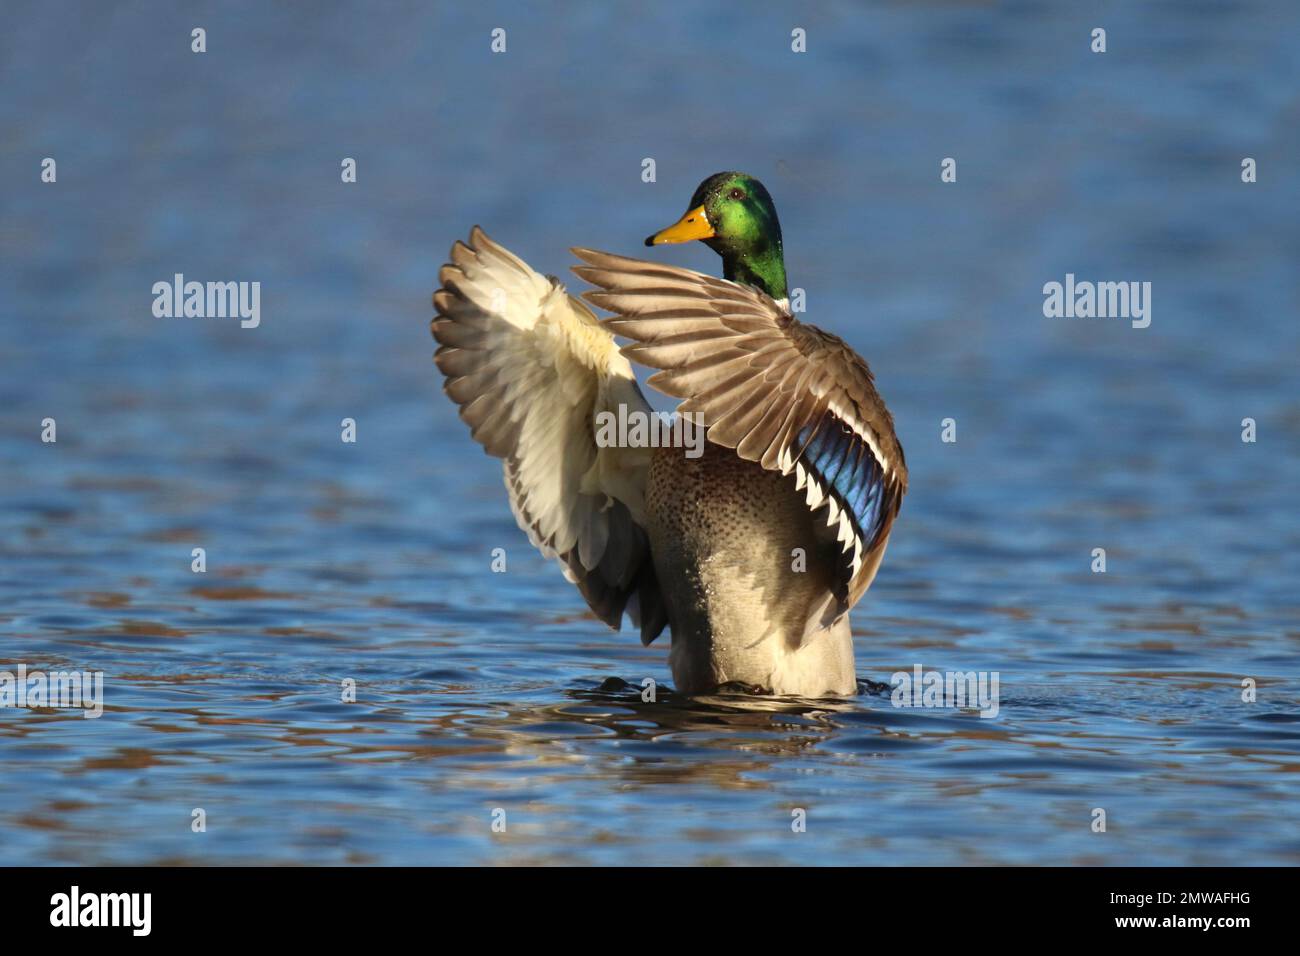 Drake mallard duck Anas platyrhynchos flapping his winnings on a blue lake in winter Stock Photo